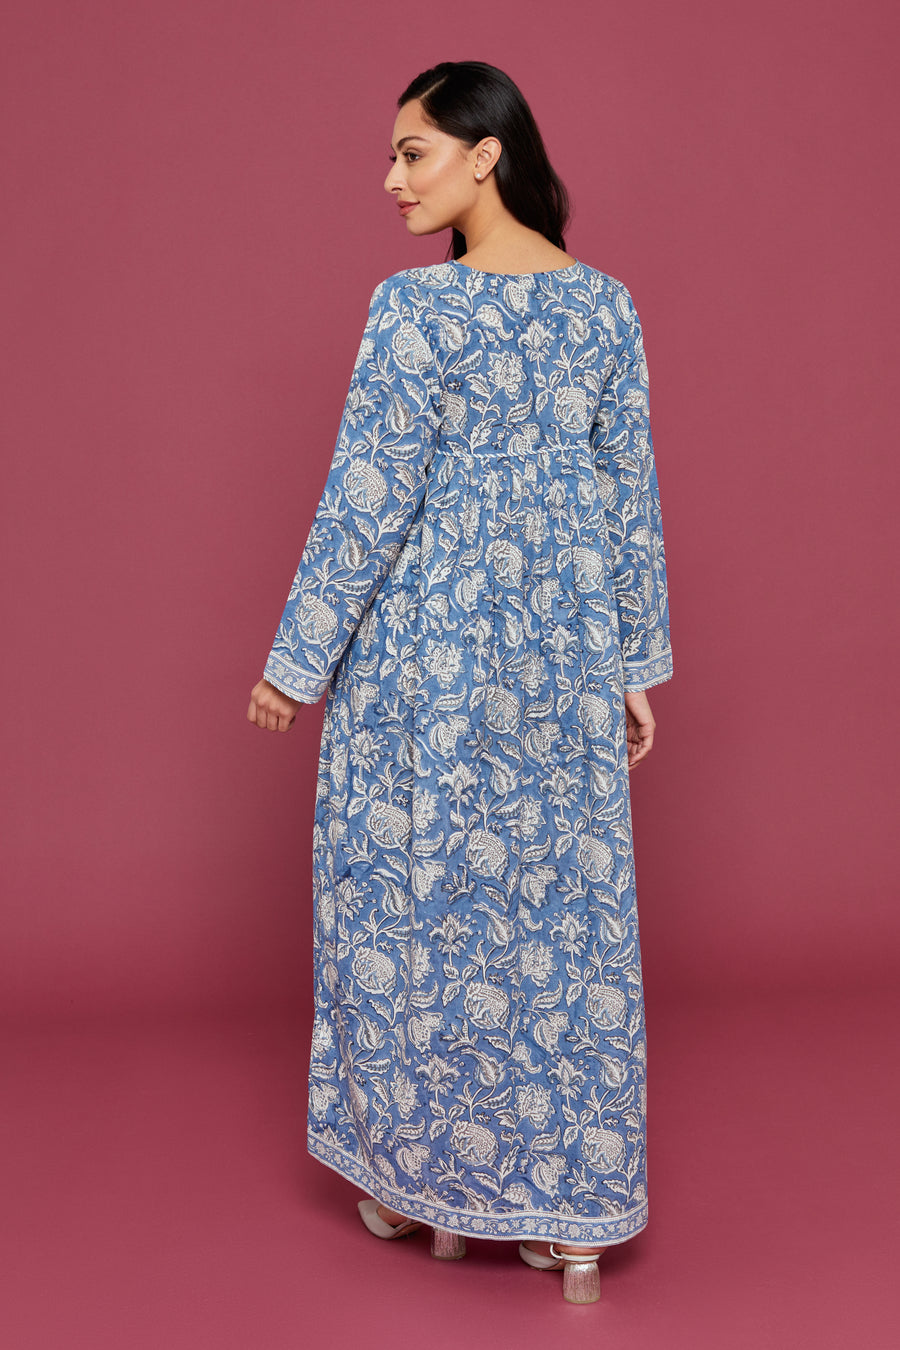 Narjee Block Printed Dress in Indigo Blue